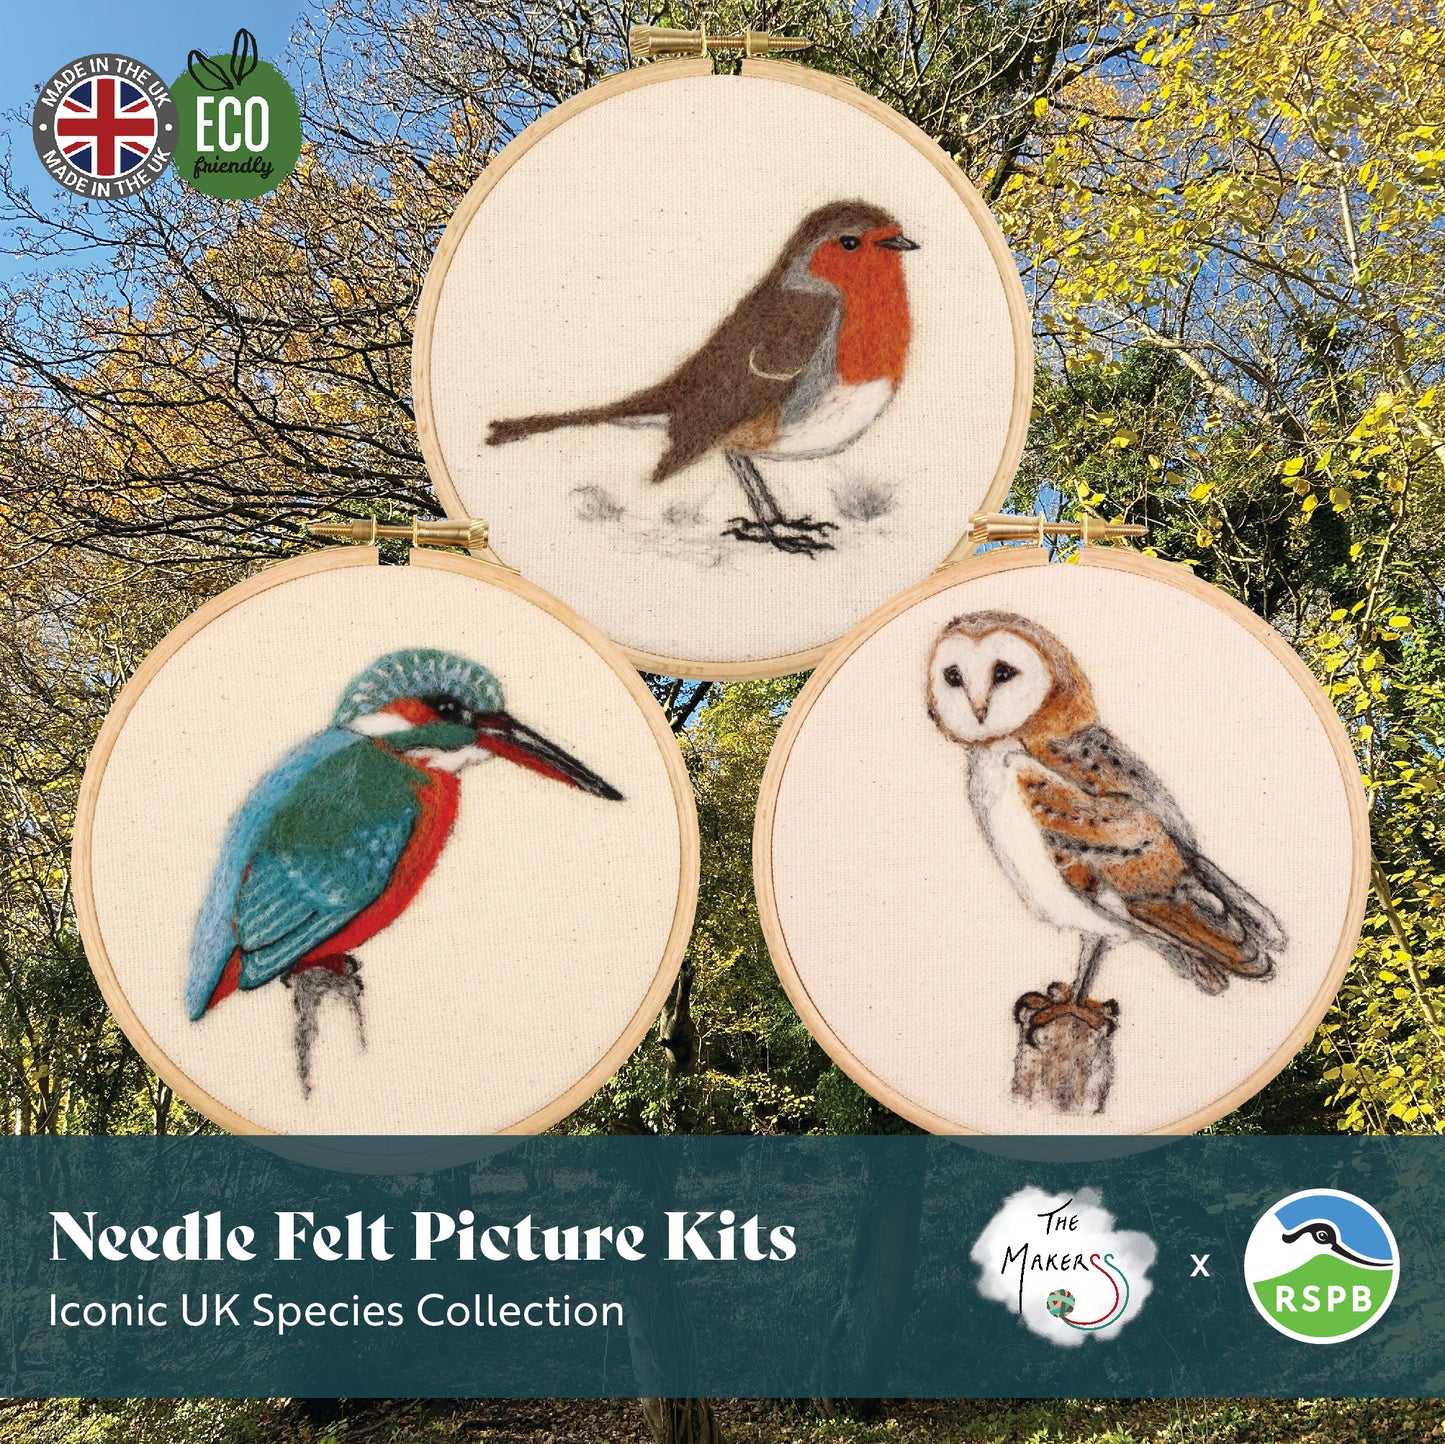 RSPB Barn Owl Needle Felt Picture Kit - The Makerss